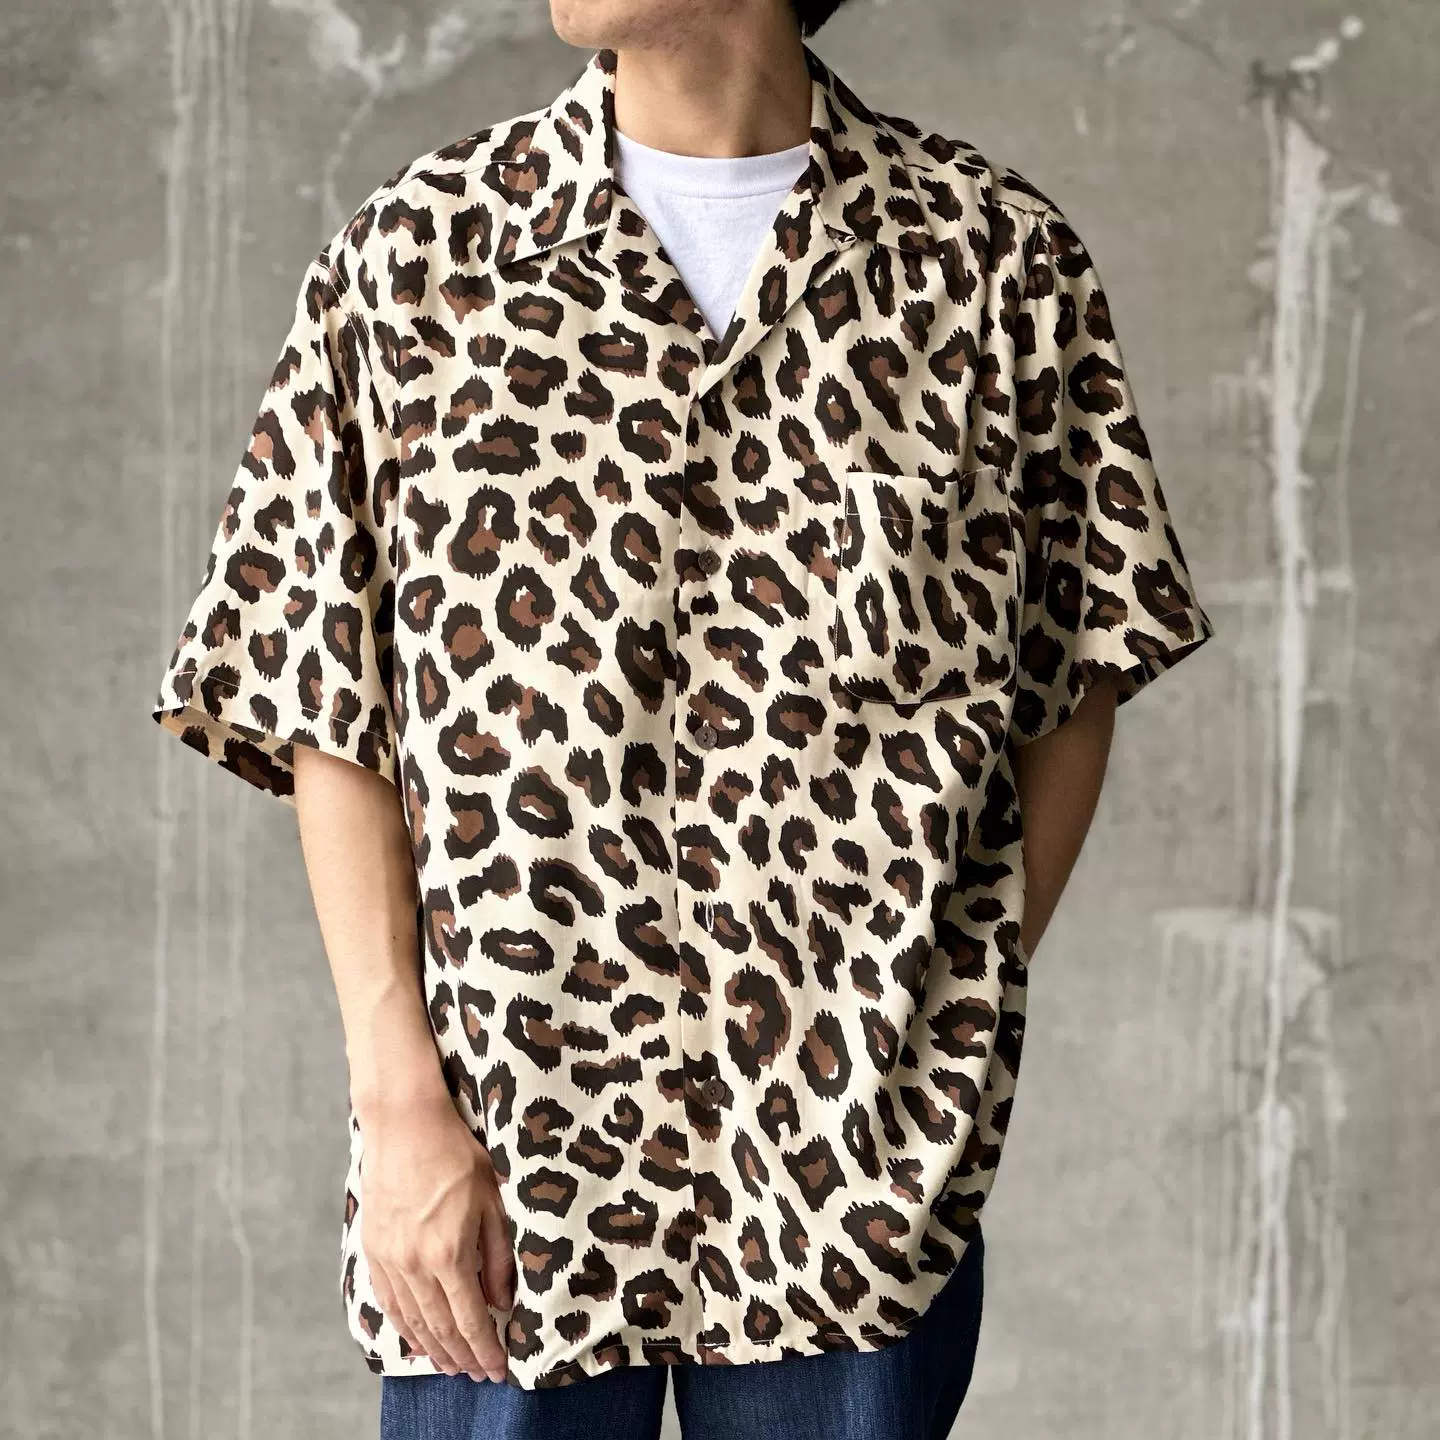 壹樹WACKO MARIA LEOPARD OPEN COLLAR SHIRT 豹紋短袖襯衫23SS-Taobao